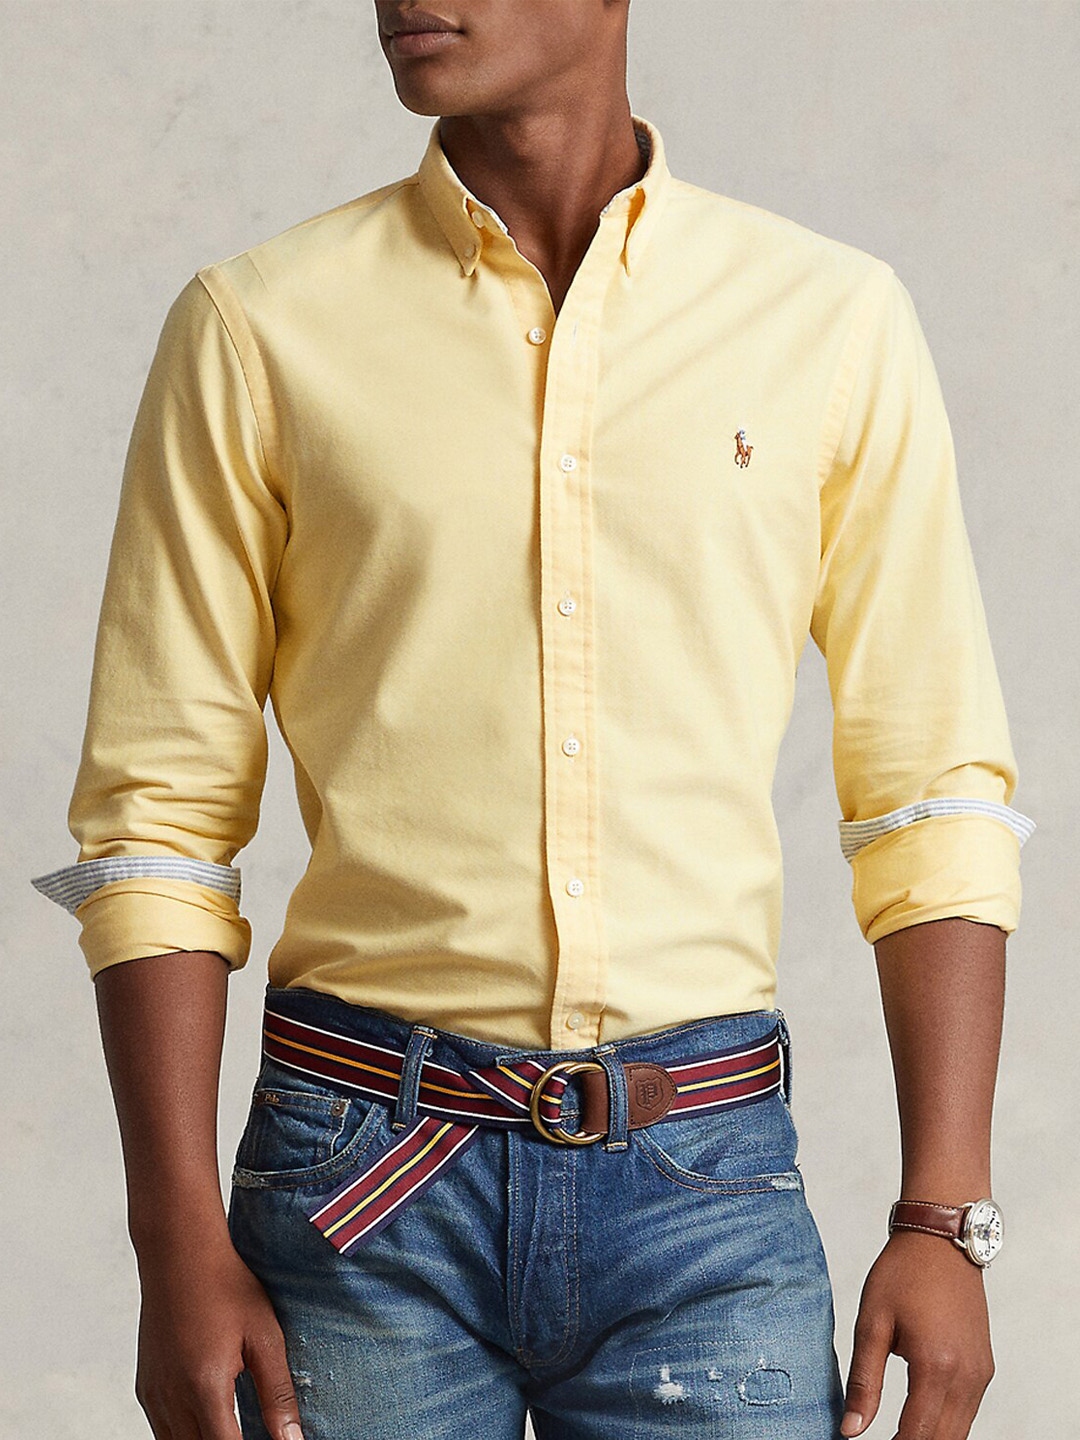 Shirts Polo Ralph Lauren - Button-down Oxford white shirt - 211664427003